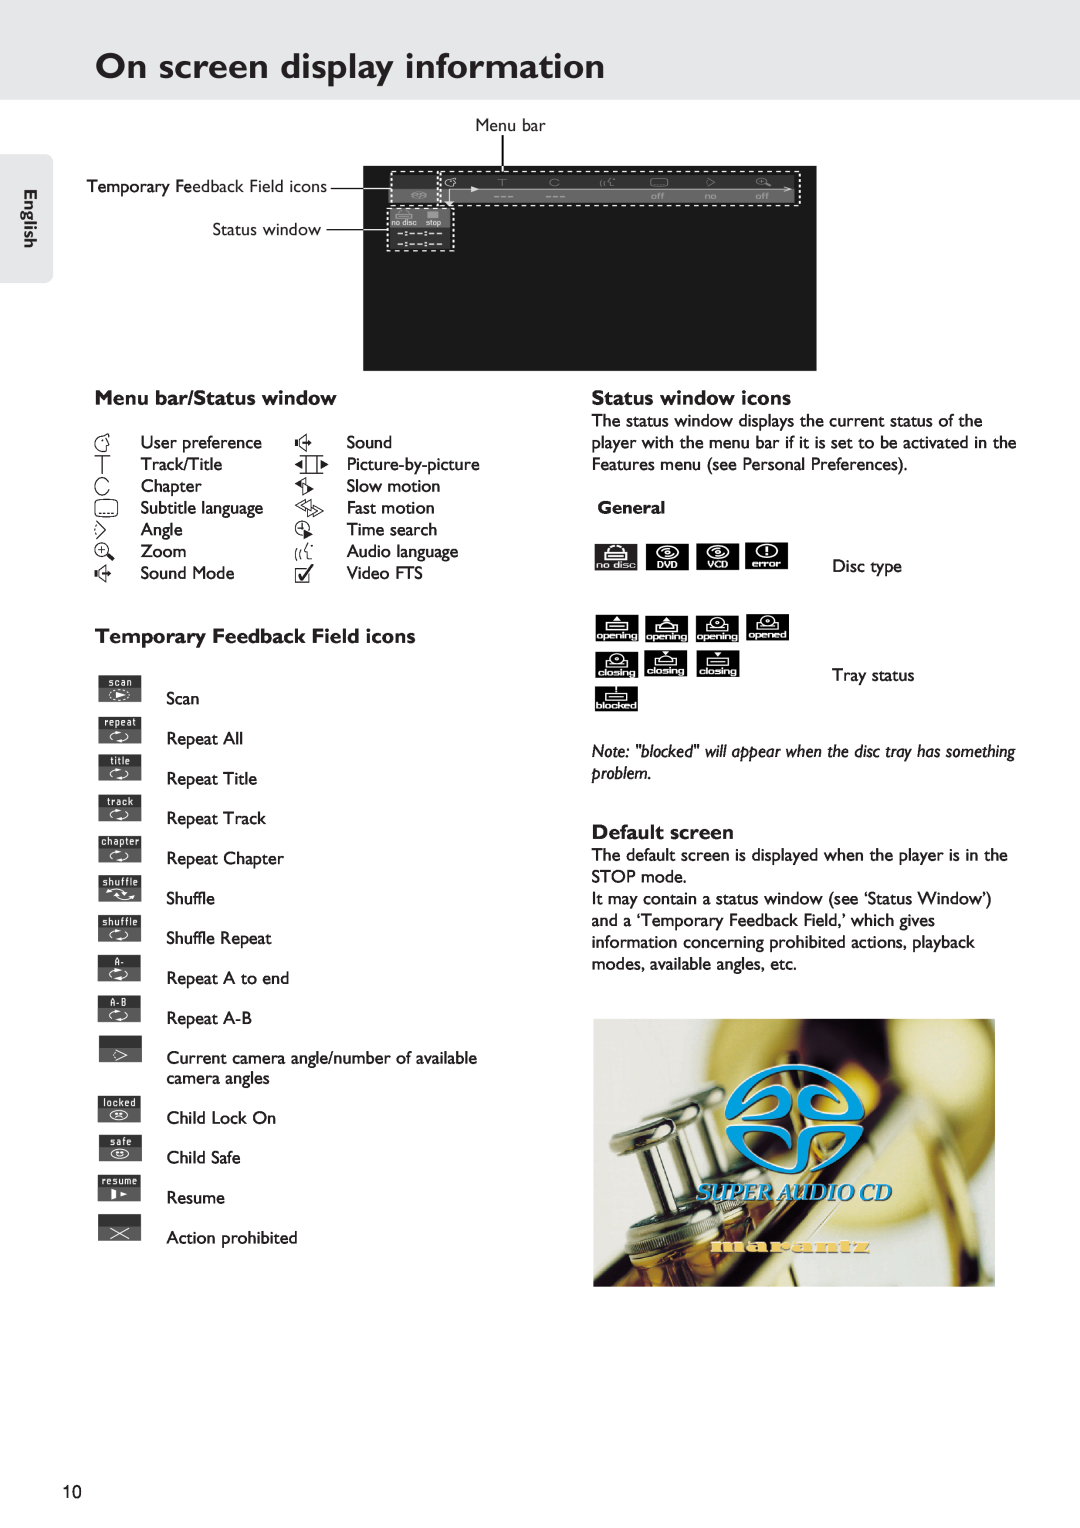 Marantz SA-12S1 On screen display information, Menu bar/Status window, Status window icons, Temporary Feedback Field icons 